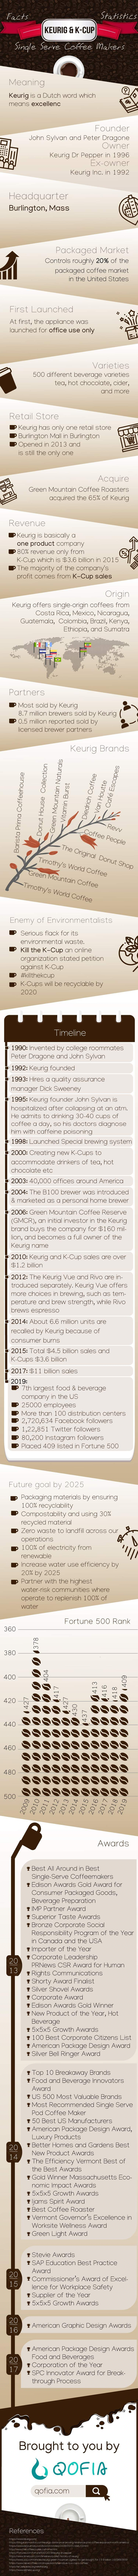 Facts-Statistics-of-Keurig-K-Cup